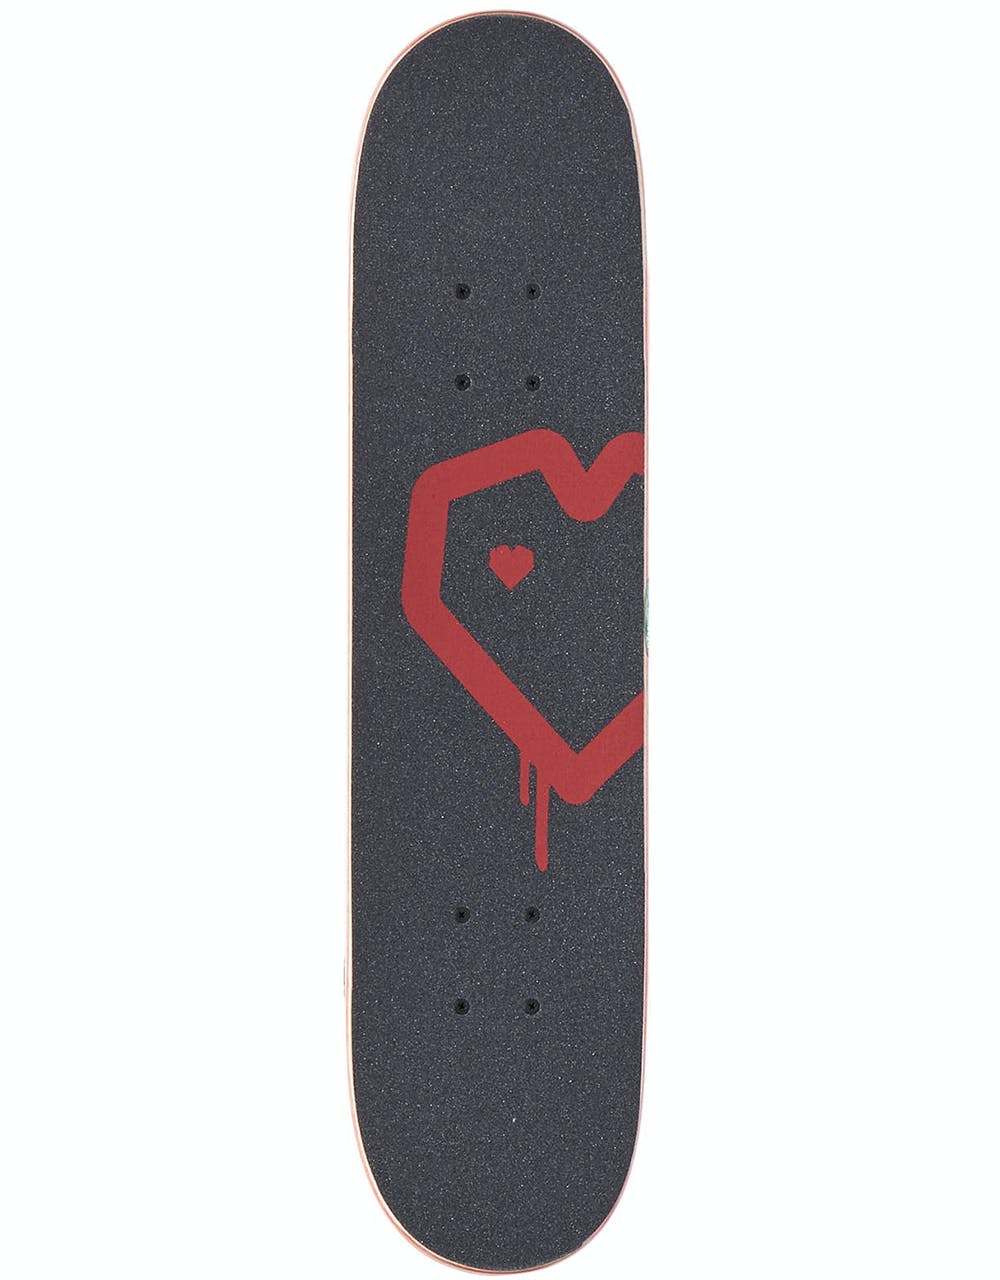 Blueprint Spray Heart Complete Skateboard - 8"